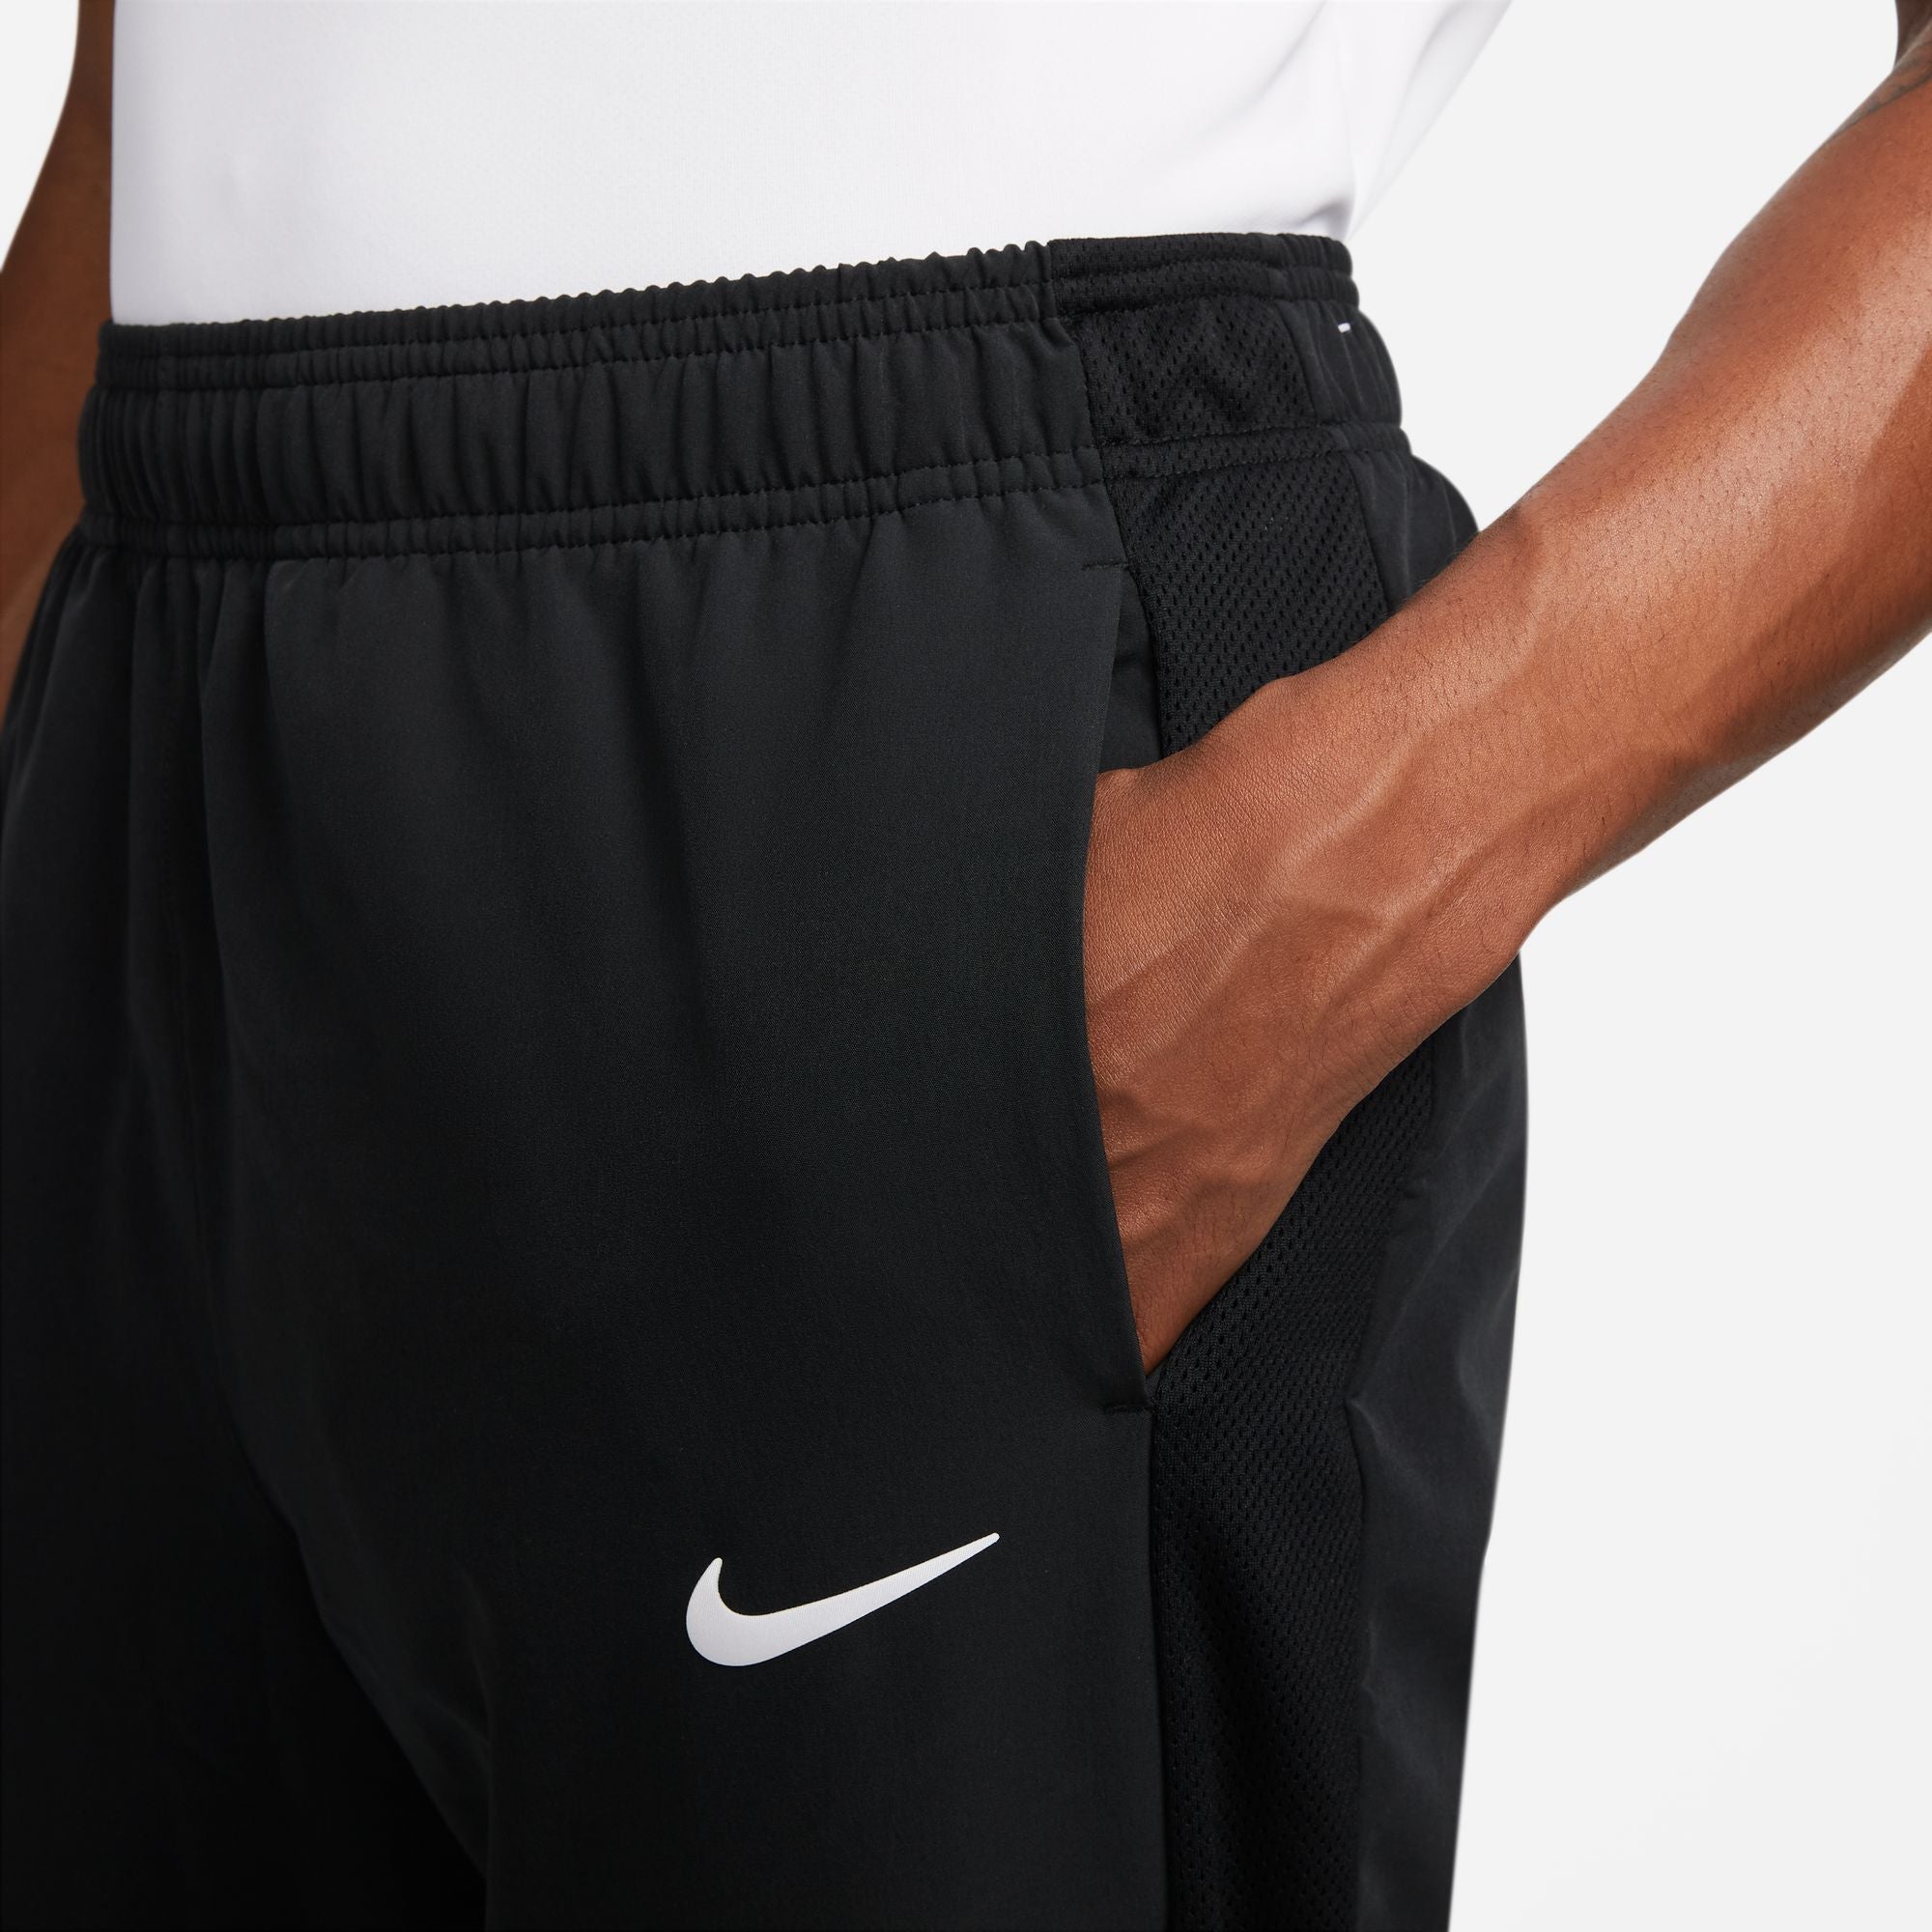 NikeCourt Advantage Men's Tennis Pants Black (3)